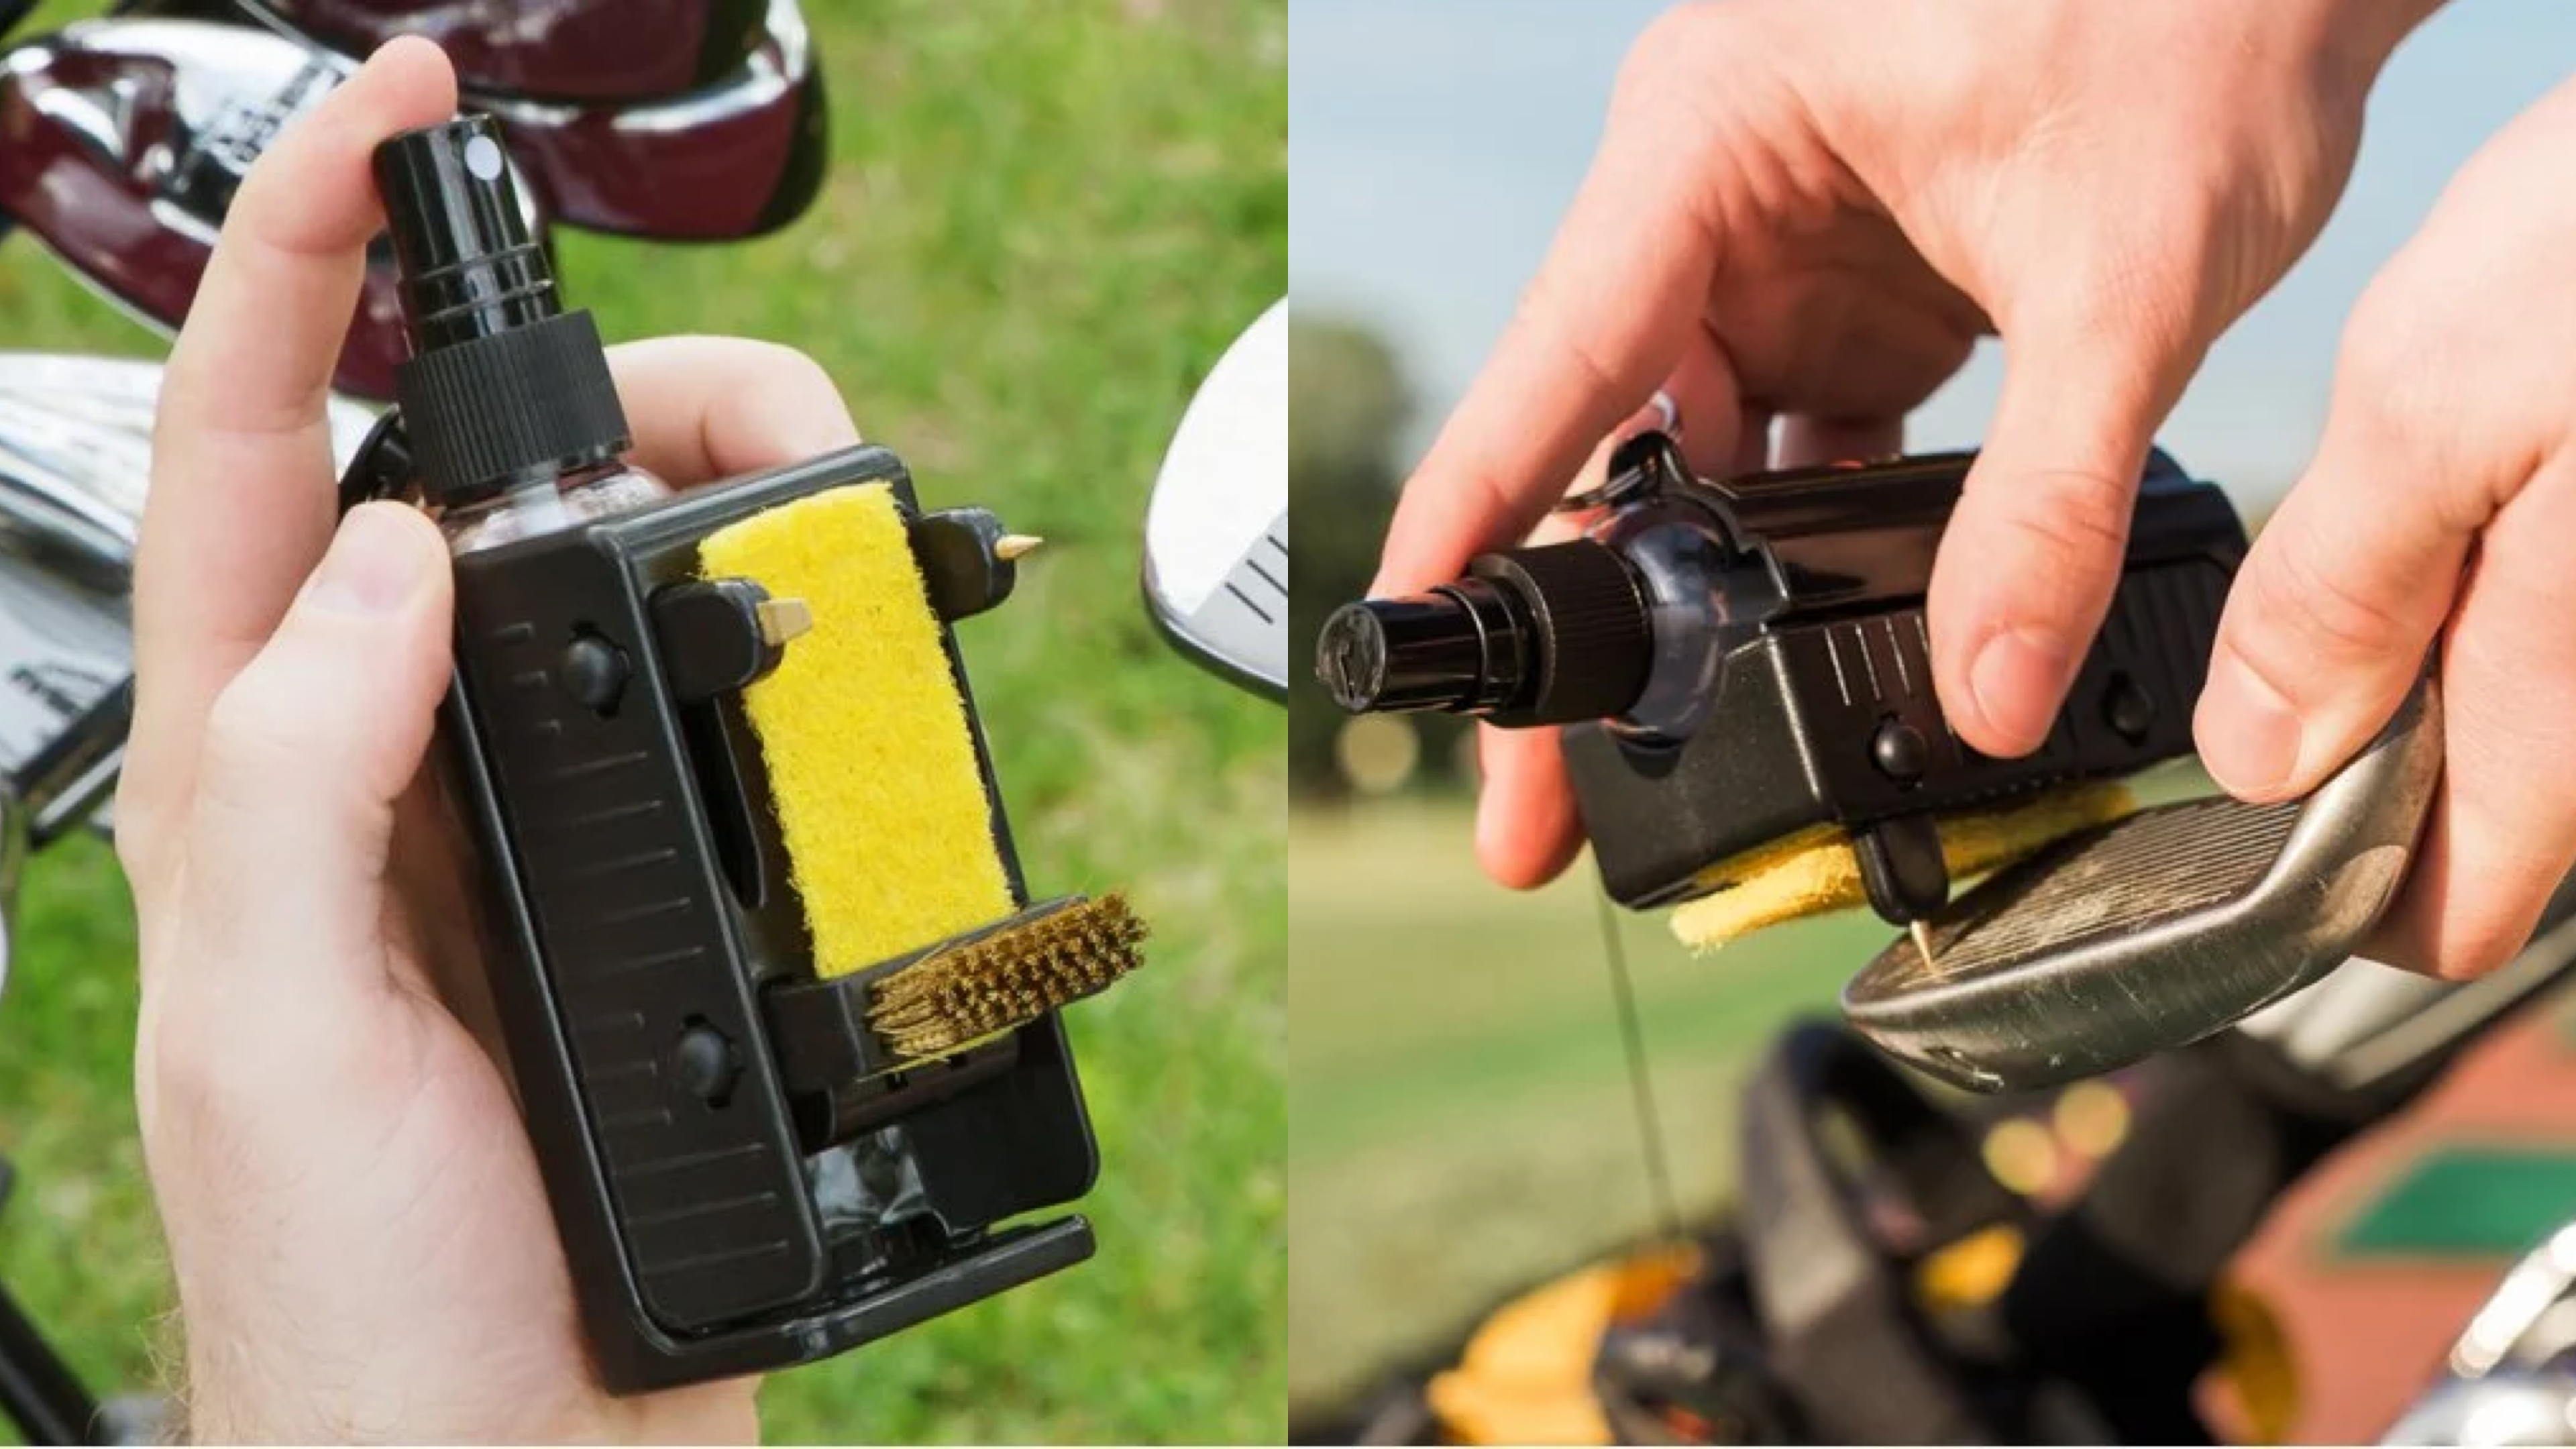 gadget that can clean golf clubs